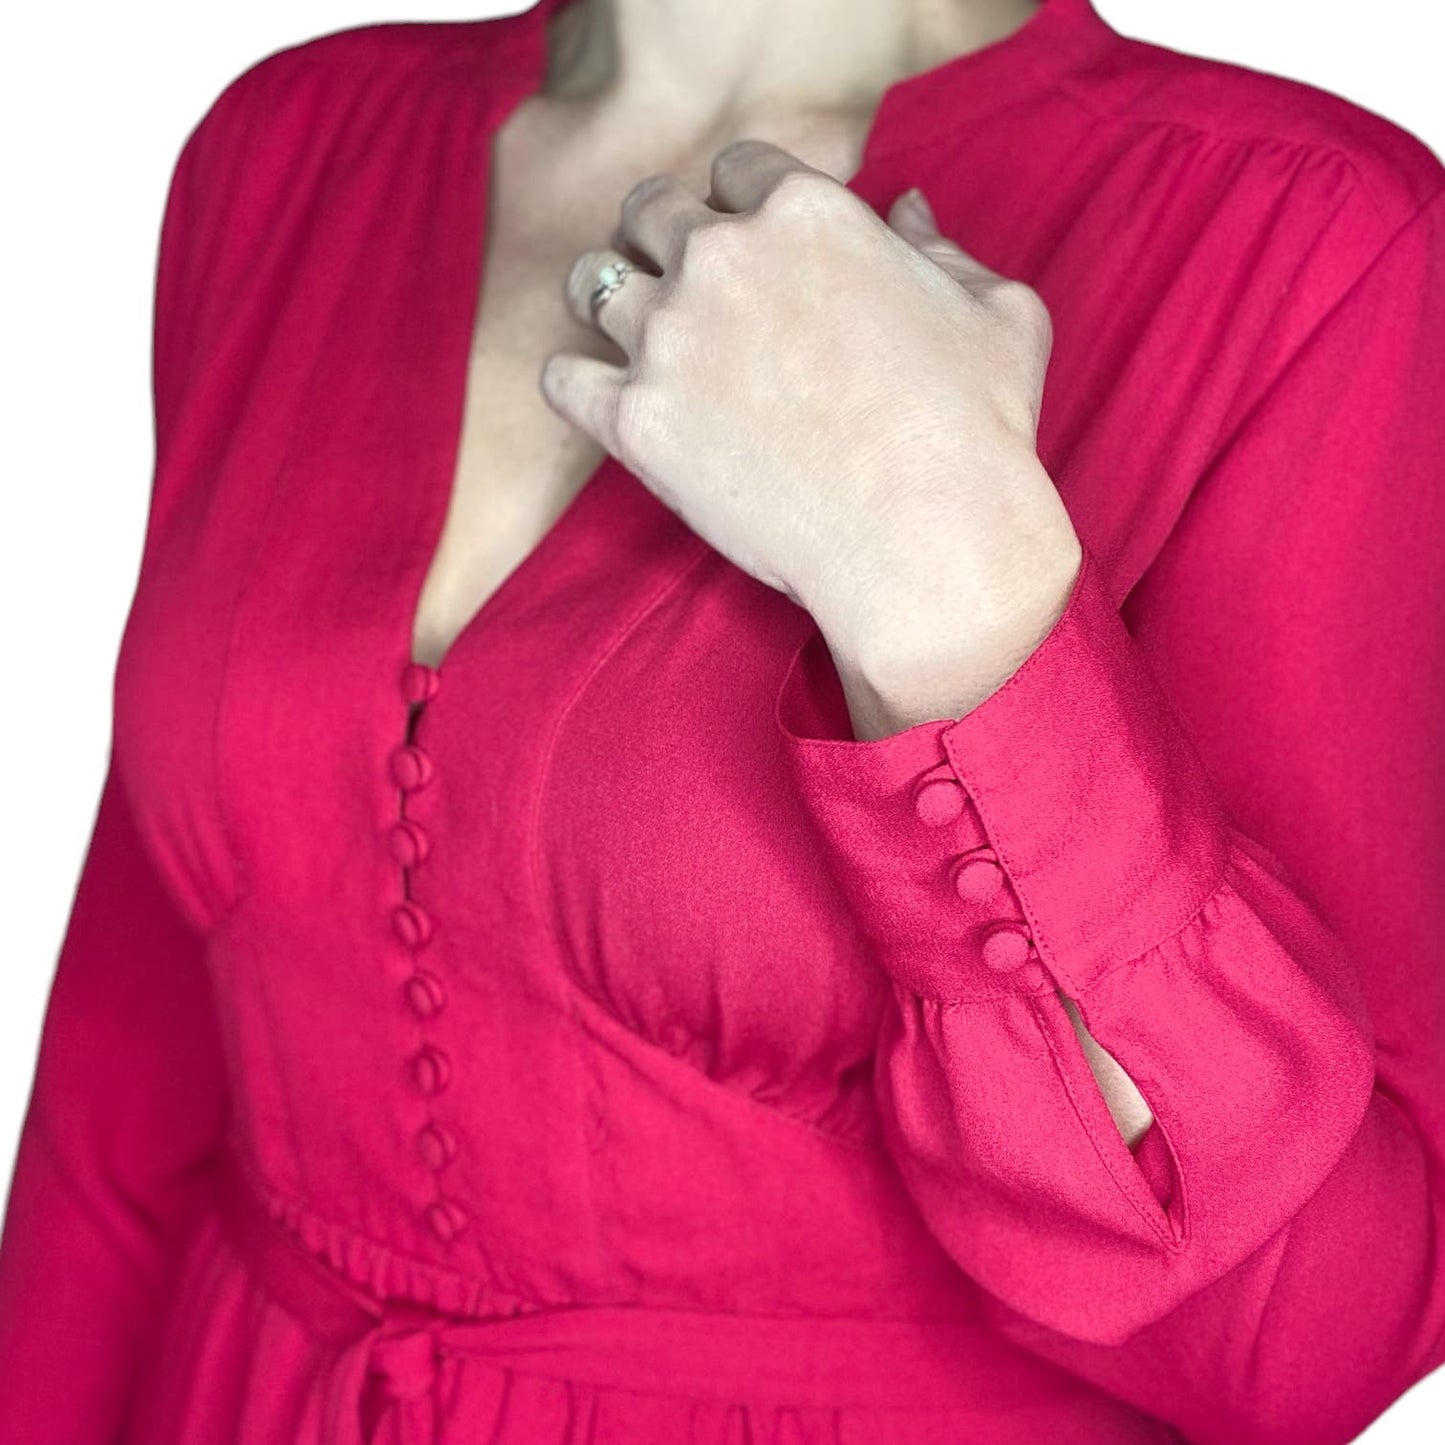 40's Vintage Style Pink Long Sleeve Dress size Large